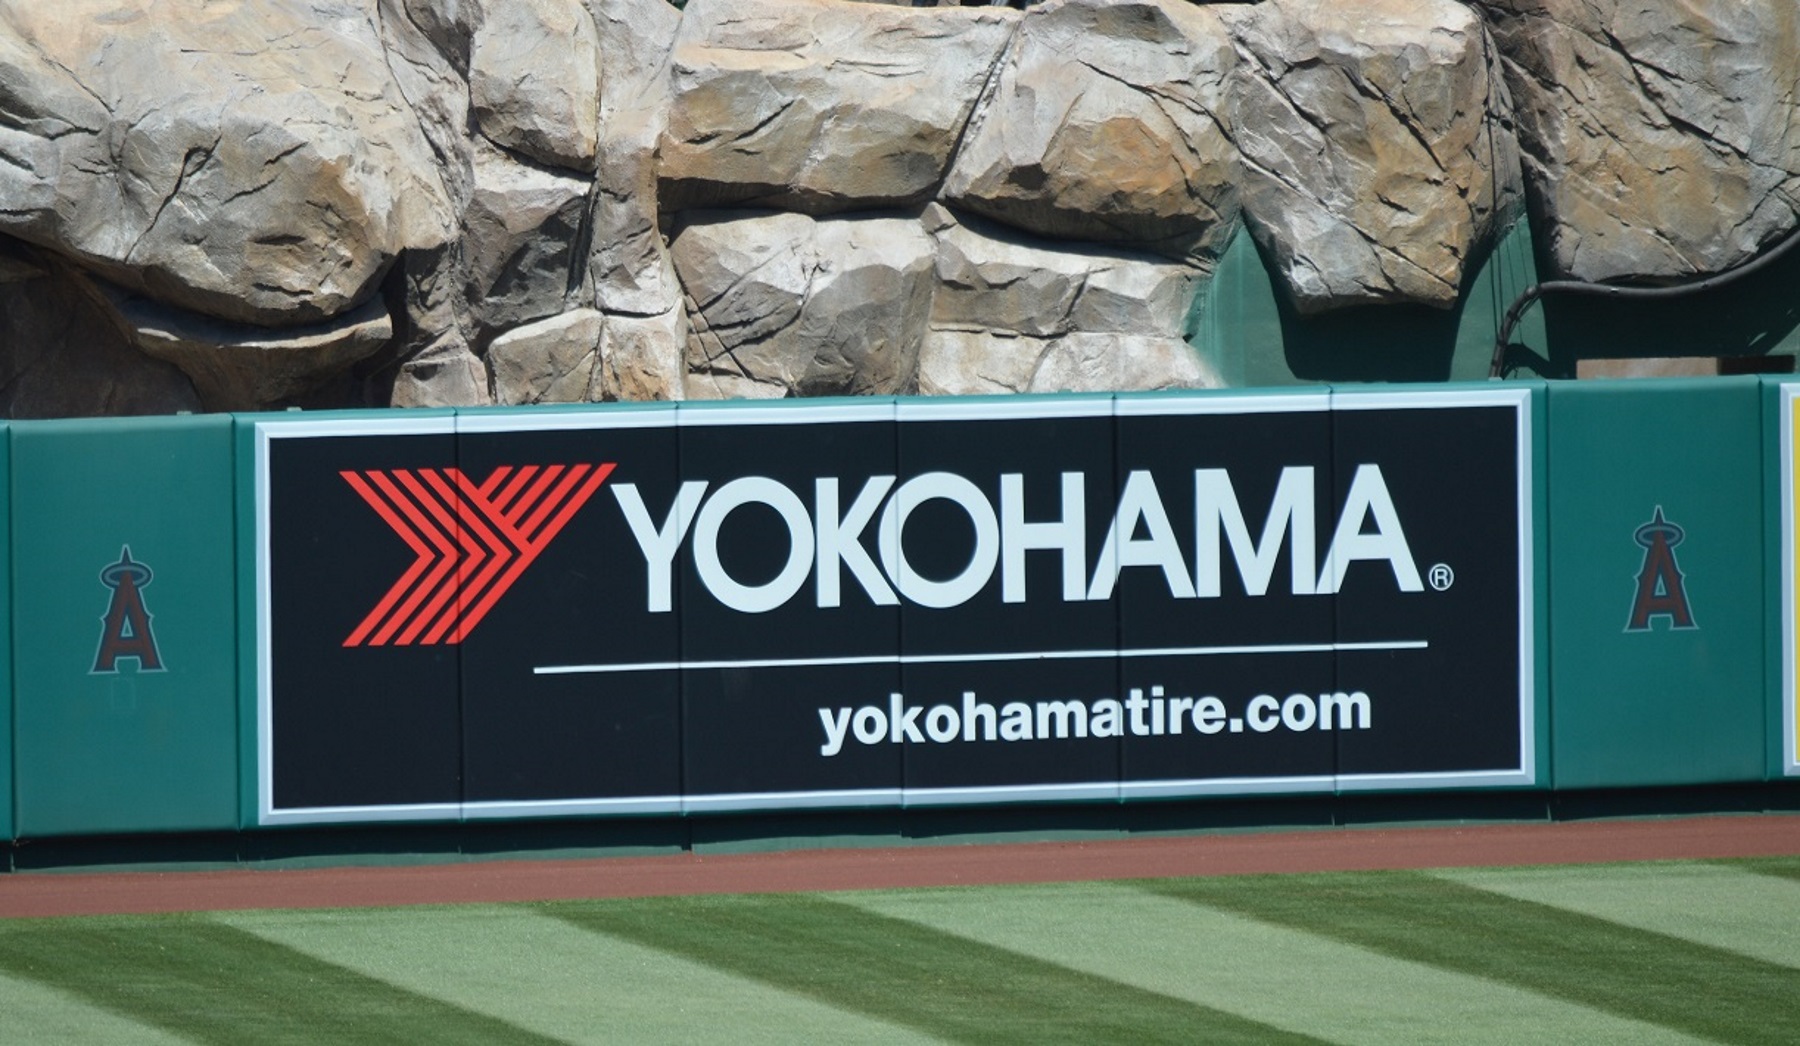 Yokohama sponsors Los Angeles Angels baseball team for 10th year